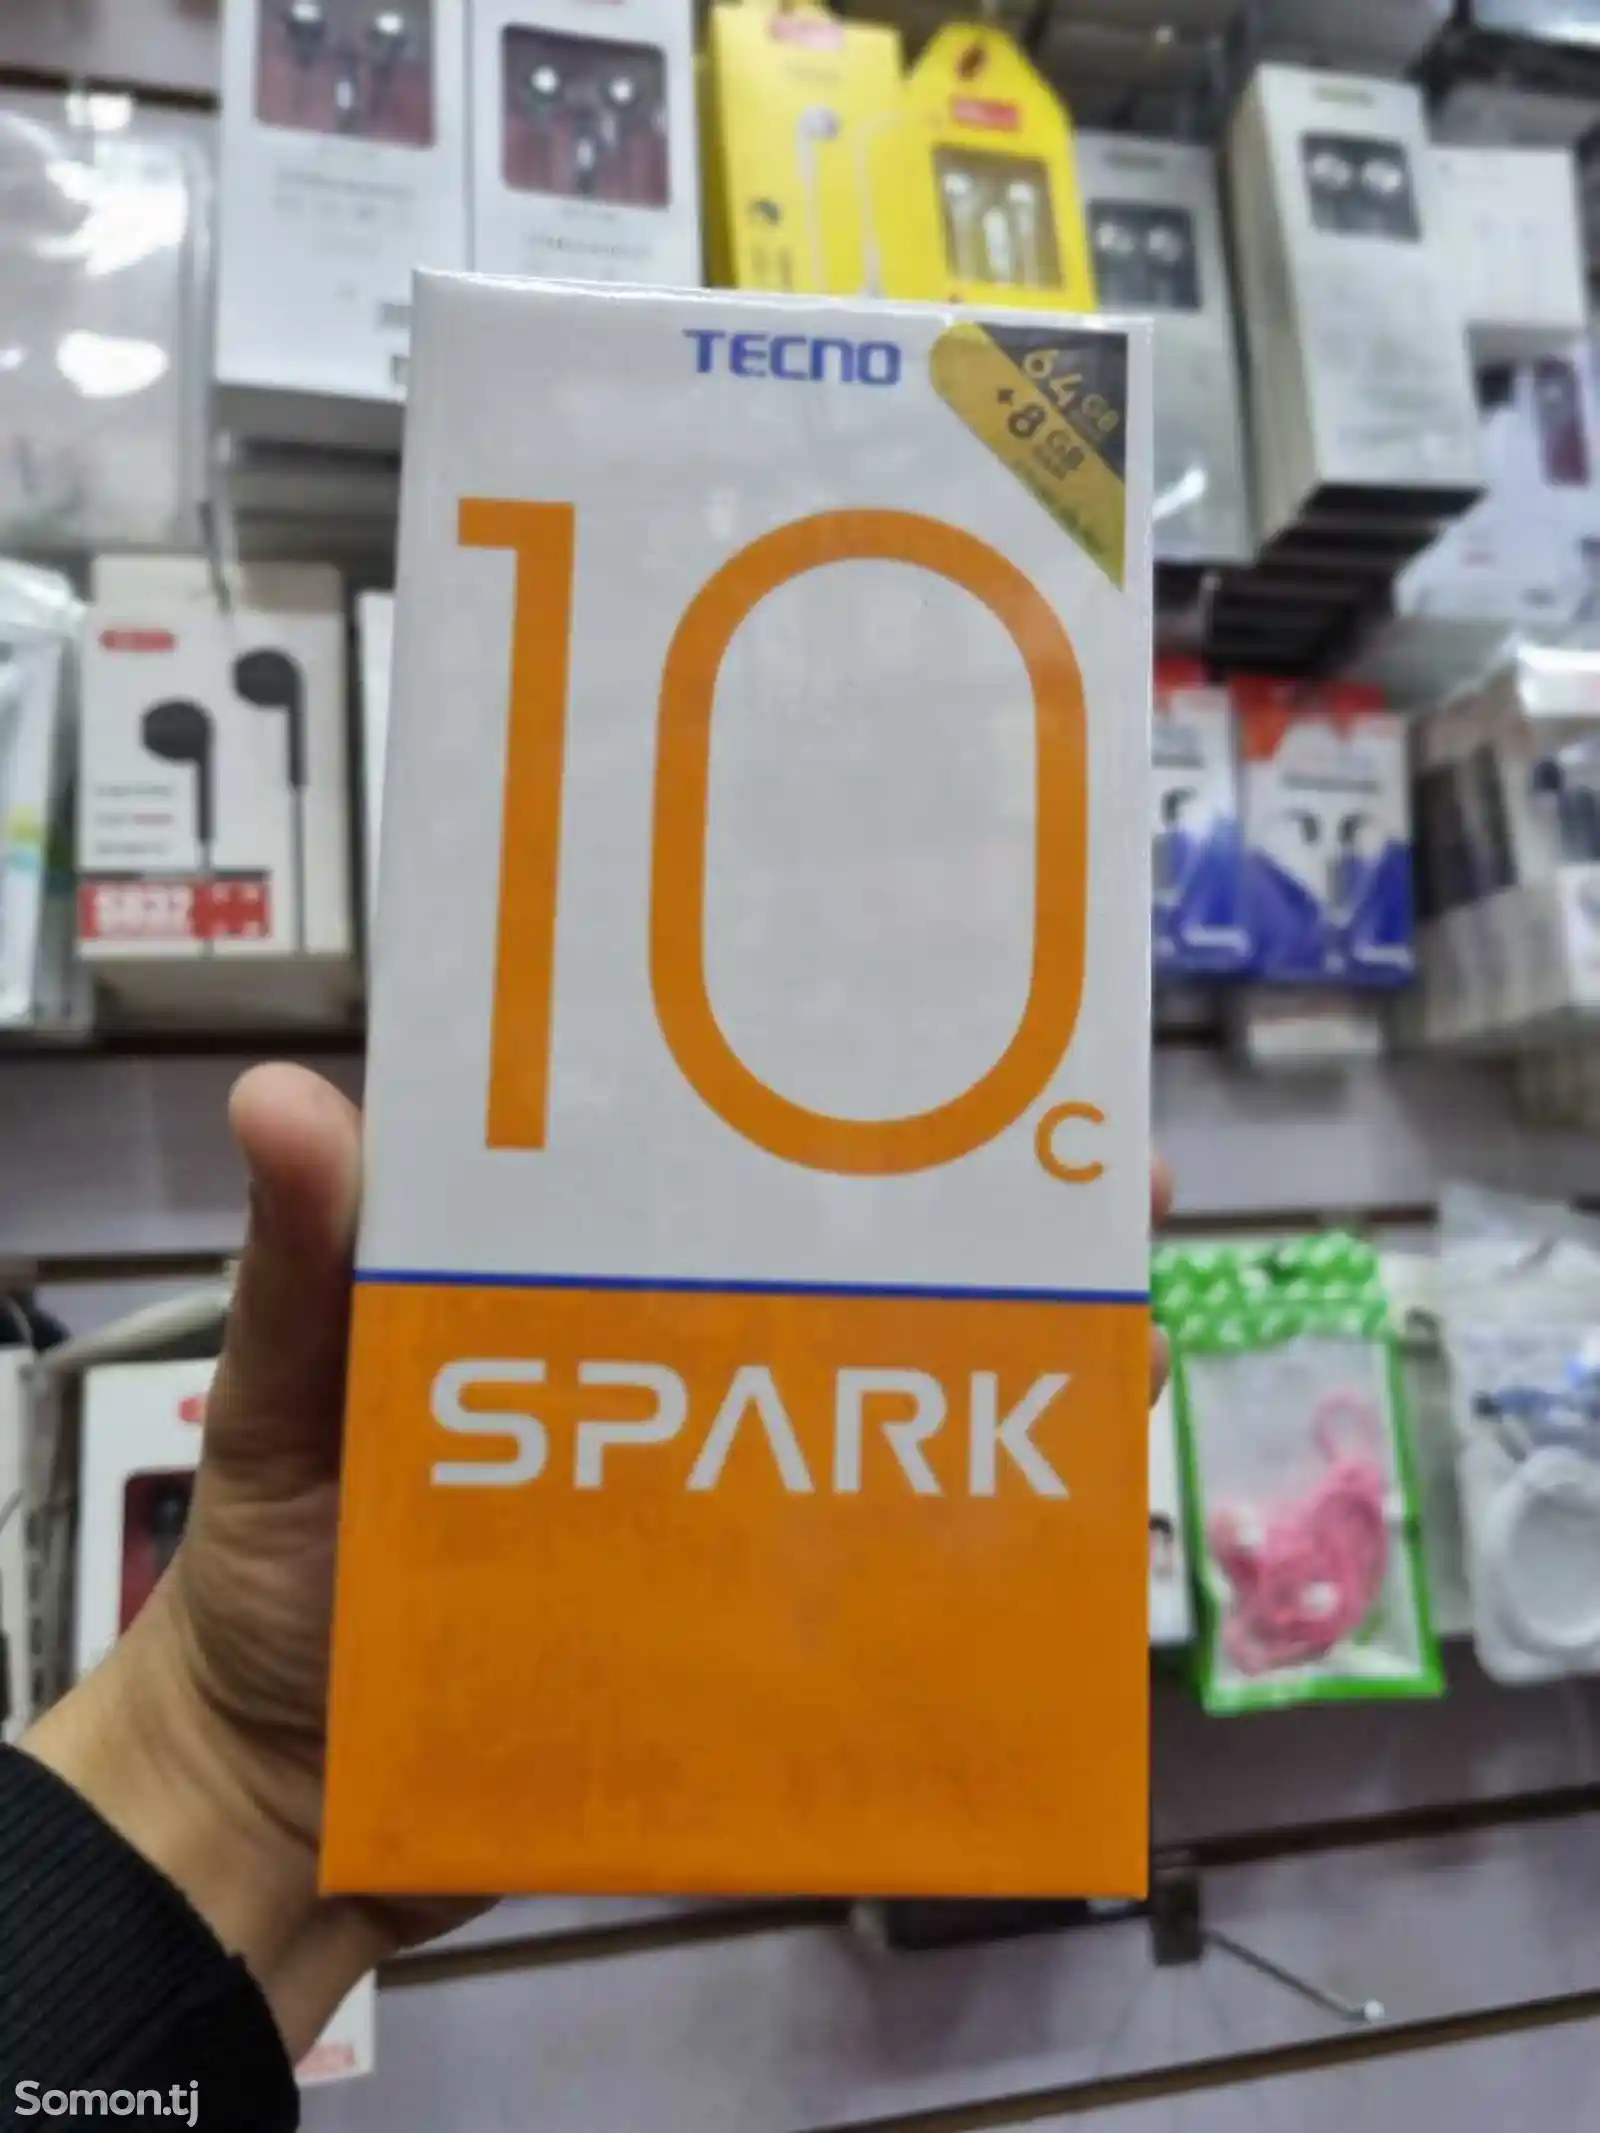 Tecno Spark 10C 4/64gb